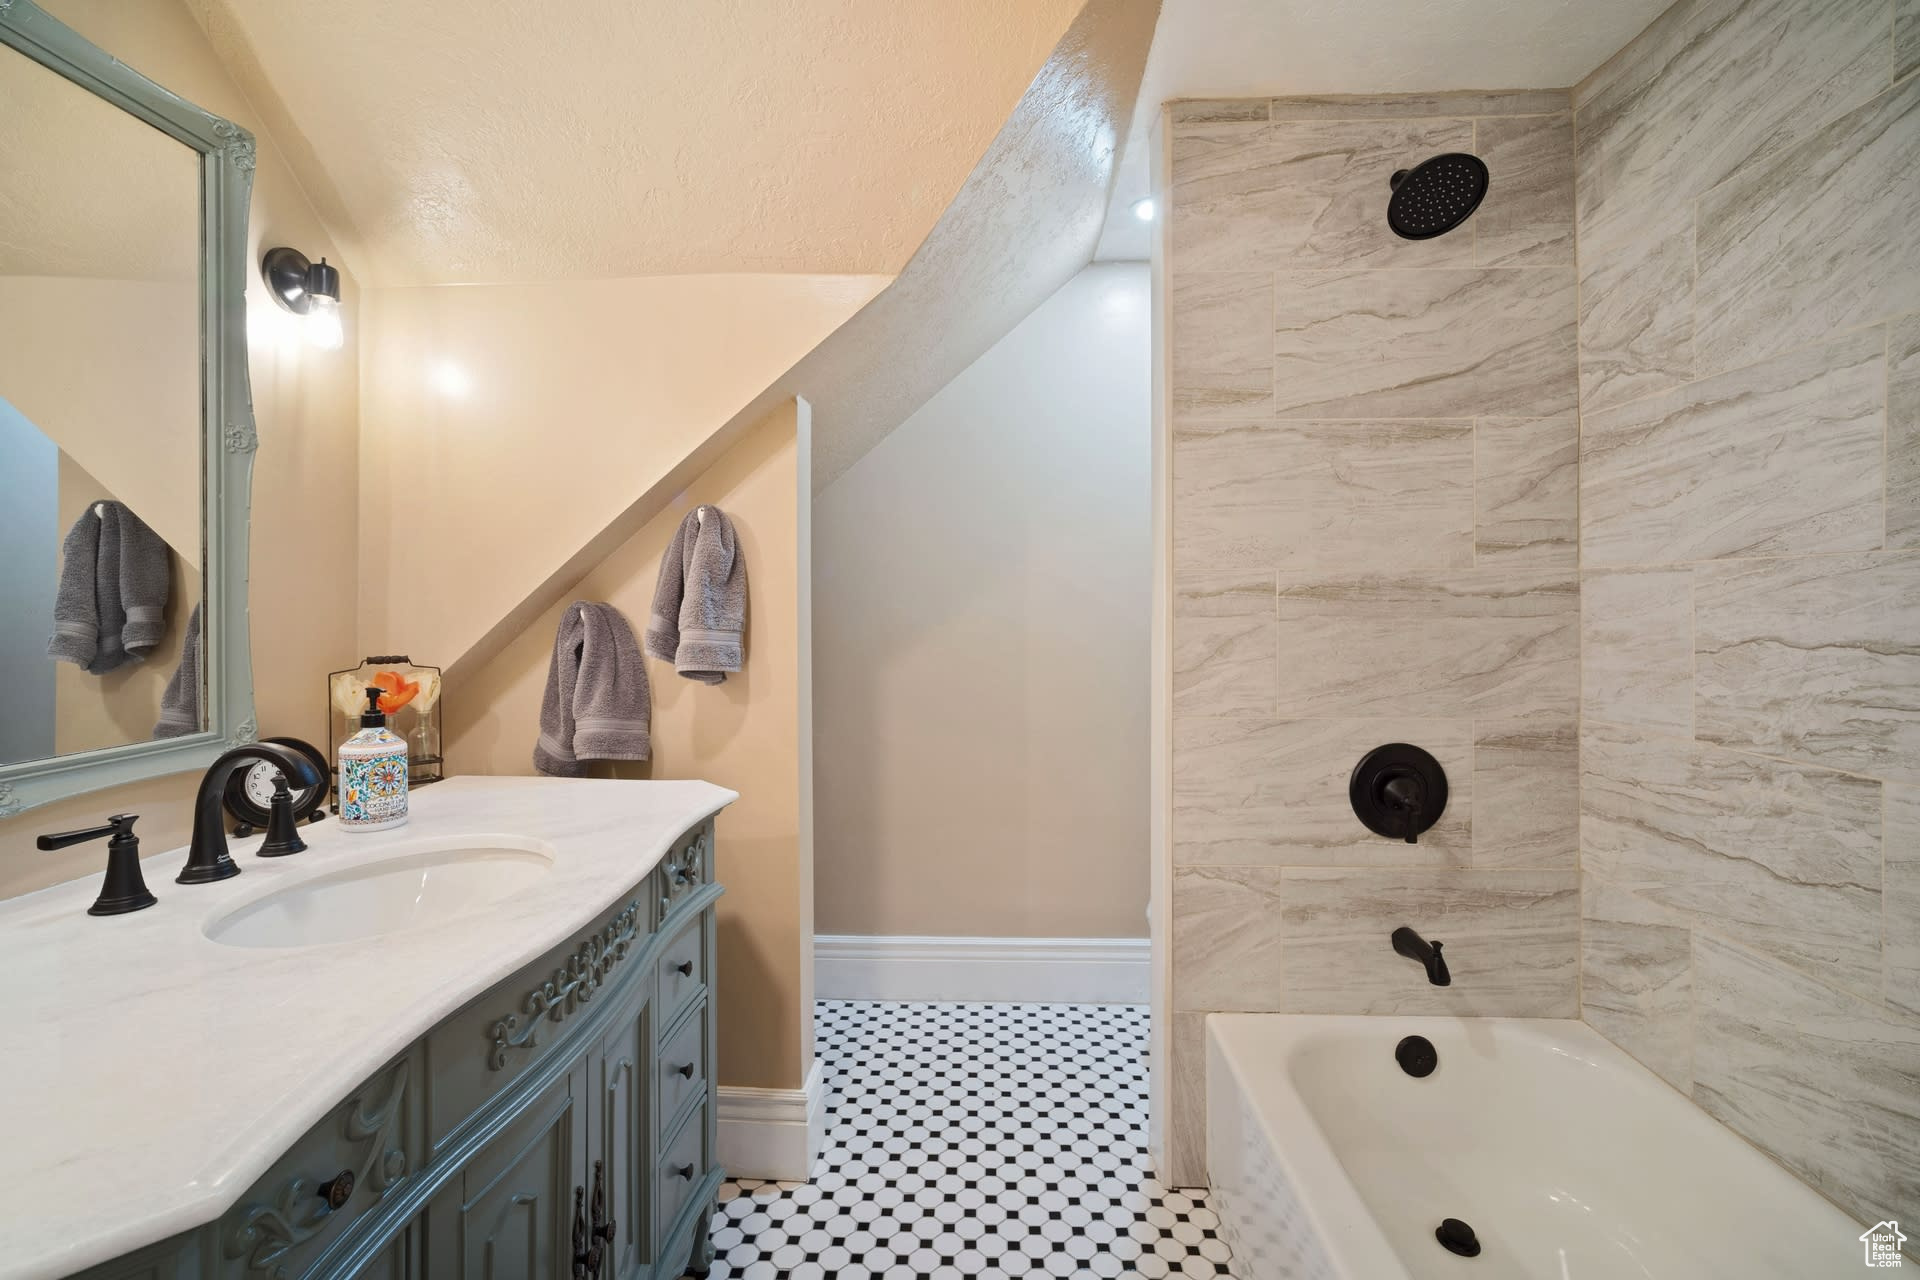 Bathroom with tile floors, tiled shower / bath, and oversized vanity